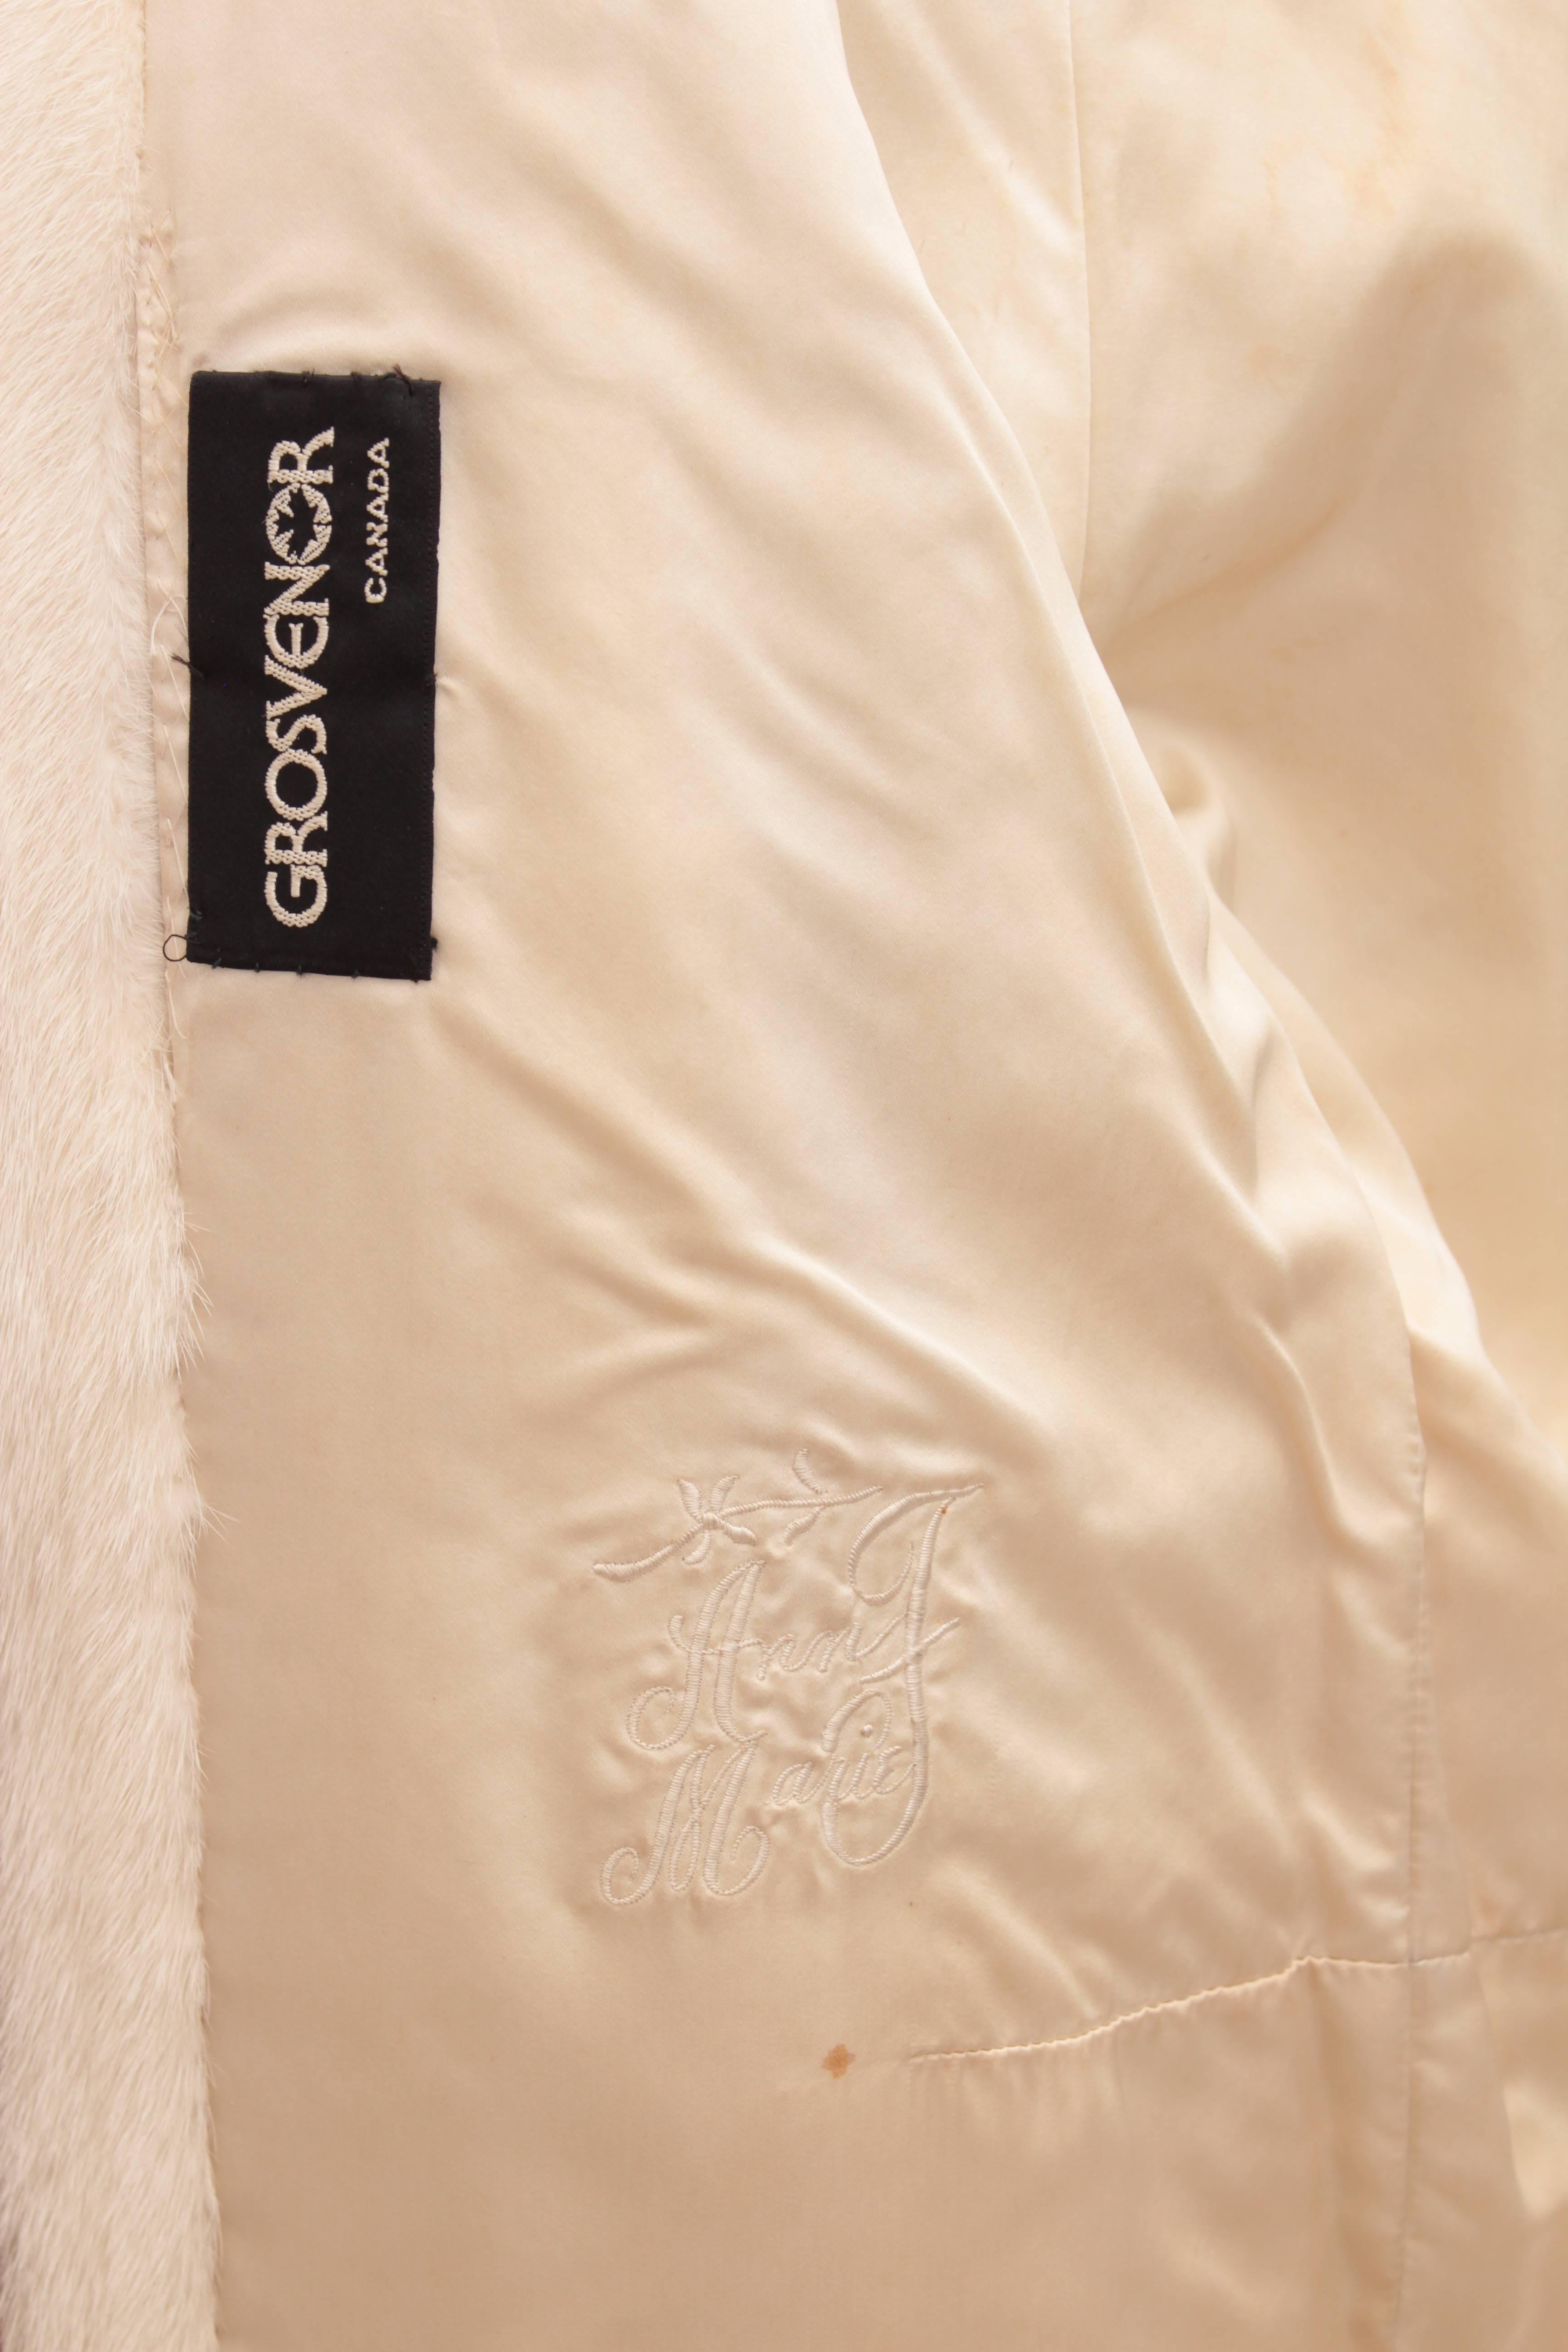 Women's Grosvenor Bonwit Teller Mink Jacket White Pastel Dark Ranch Fur As Seen in Vogue